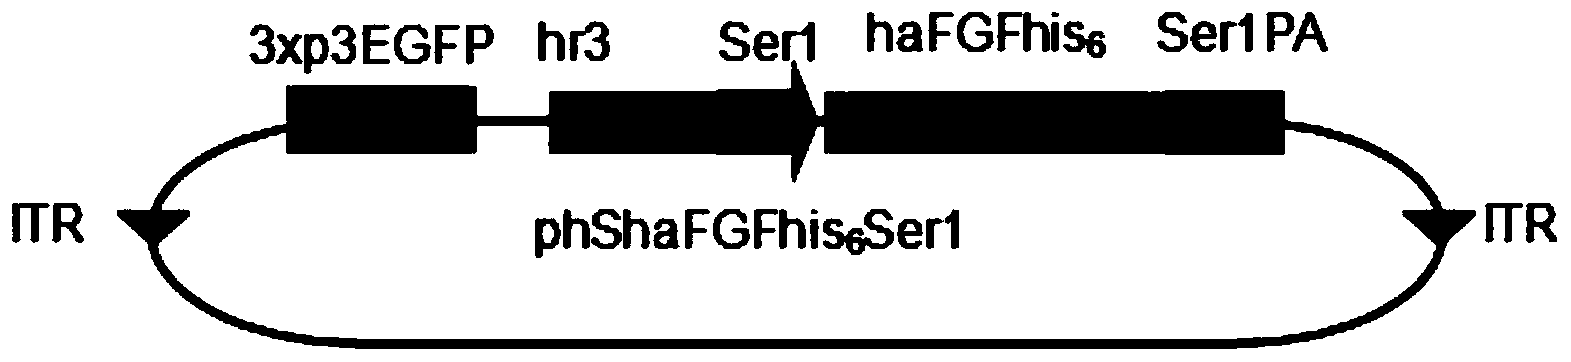 Gene for modifying human acidic fibroblast growth factor applied to silkworm silk gland expression, and expression system and application of gene